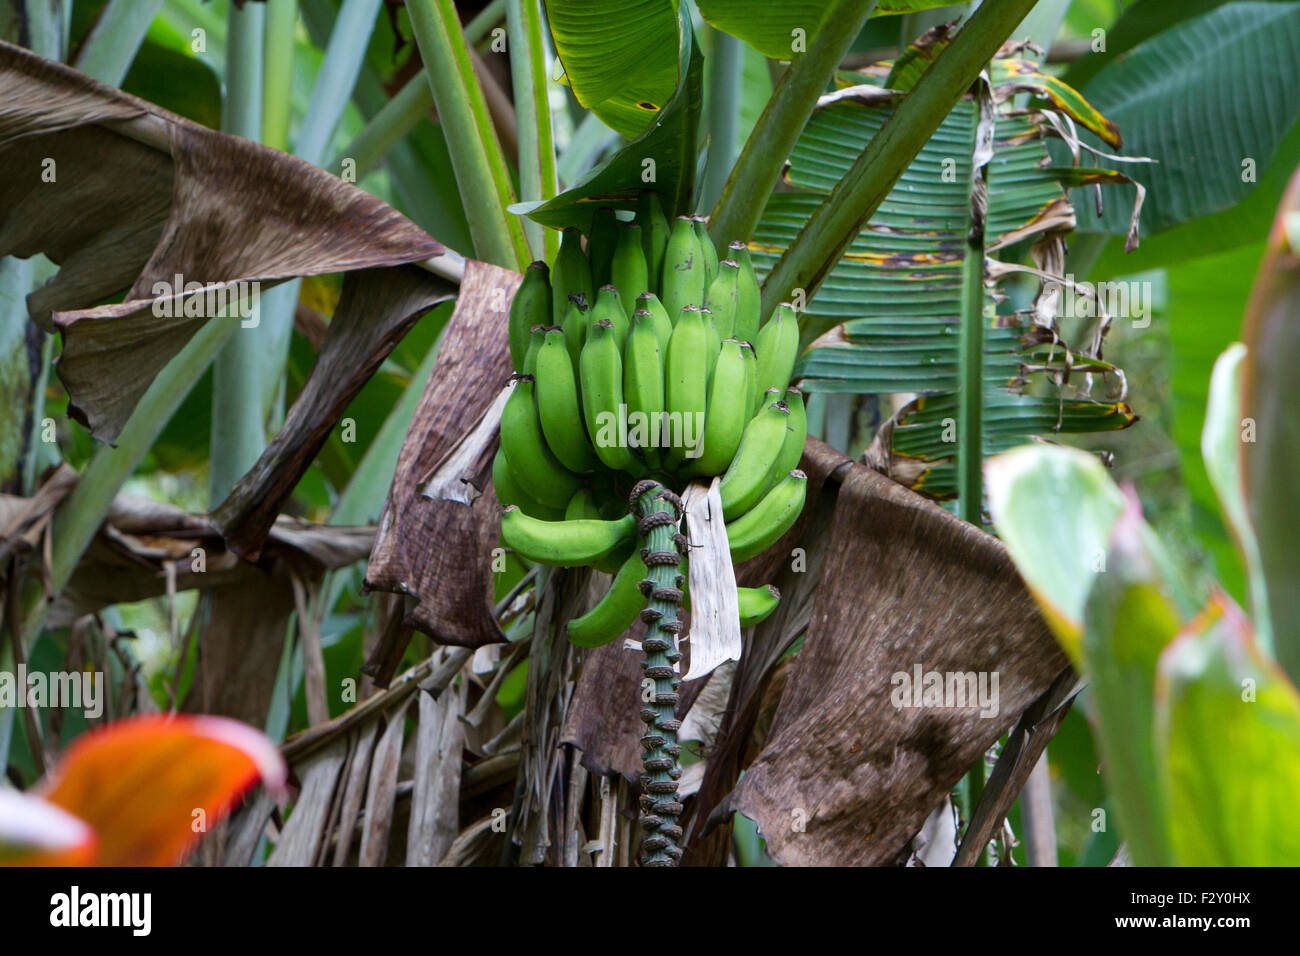 https://c8.alamy.com/comp/F2Y0HX/banana-tree-with-a-large-bunch-of-bananas-at-twin-falls-hana-highway-F2Y0HX.jpg